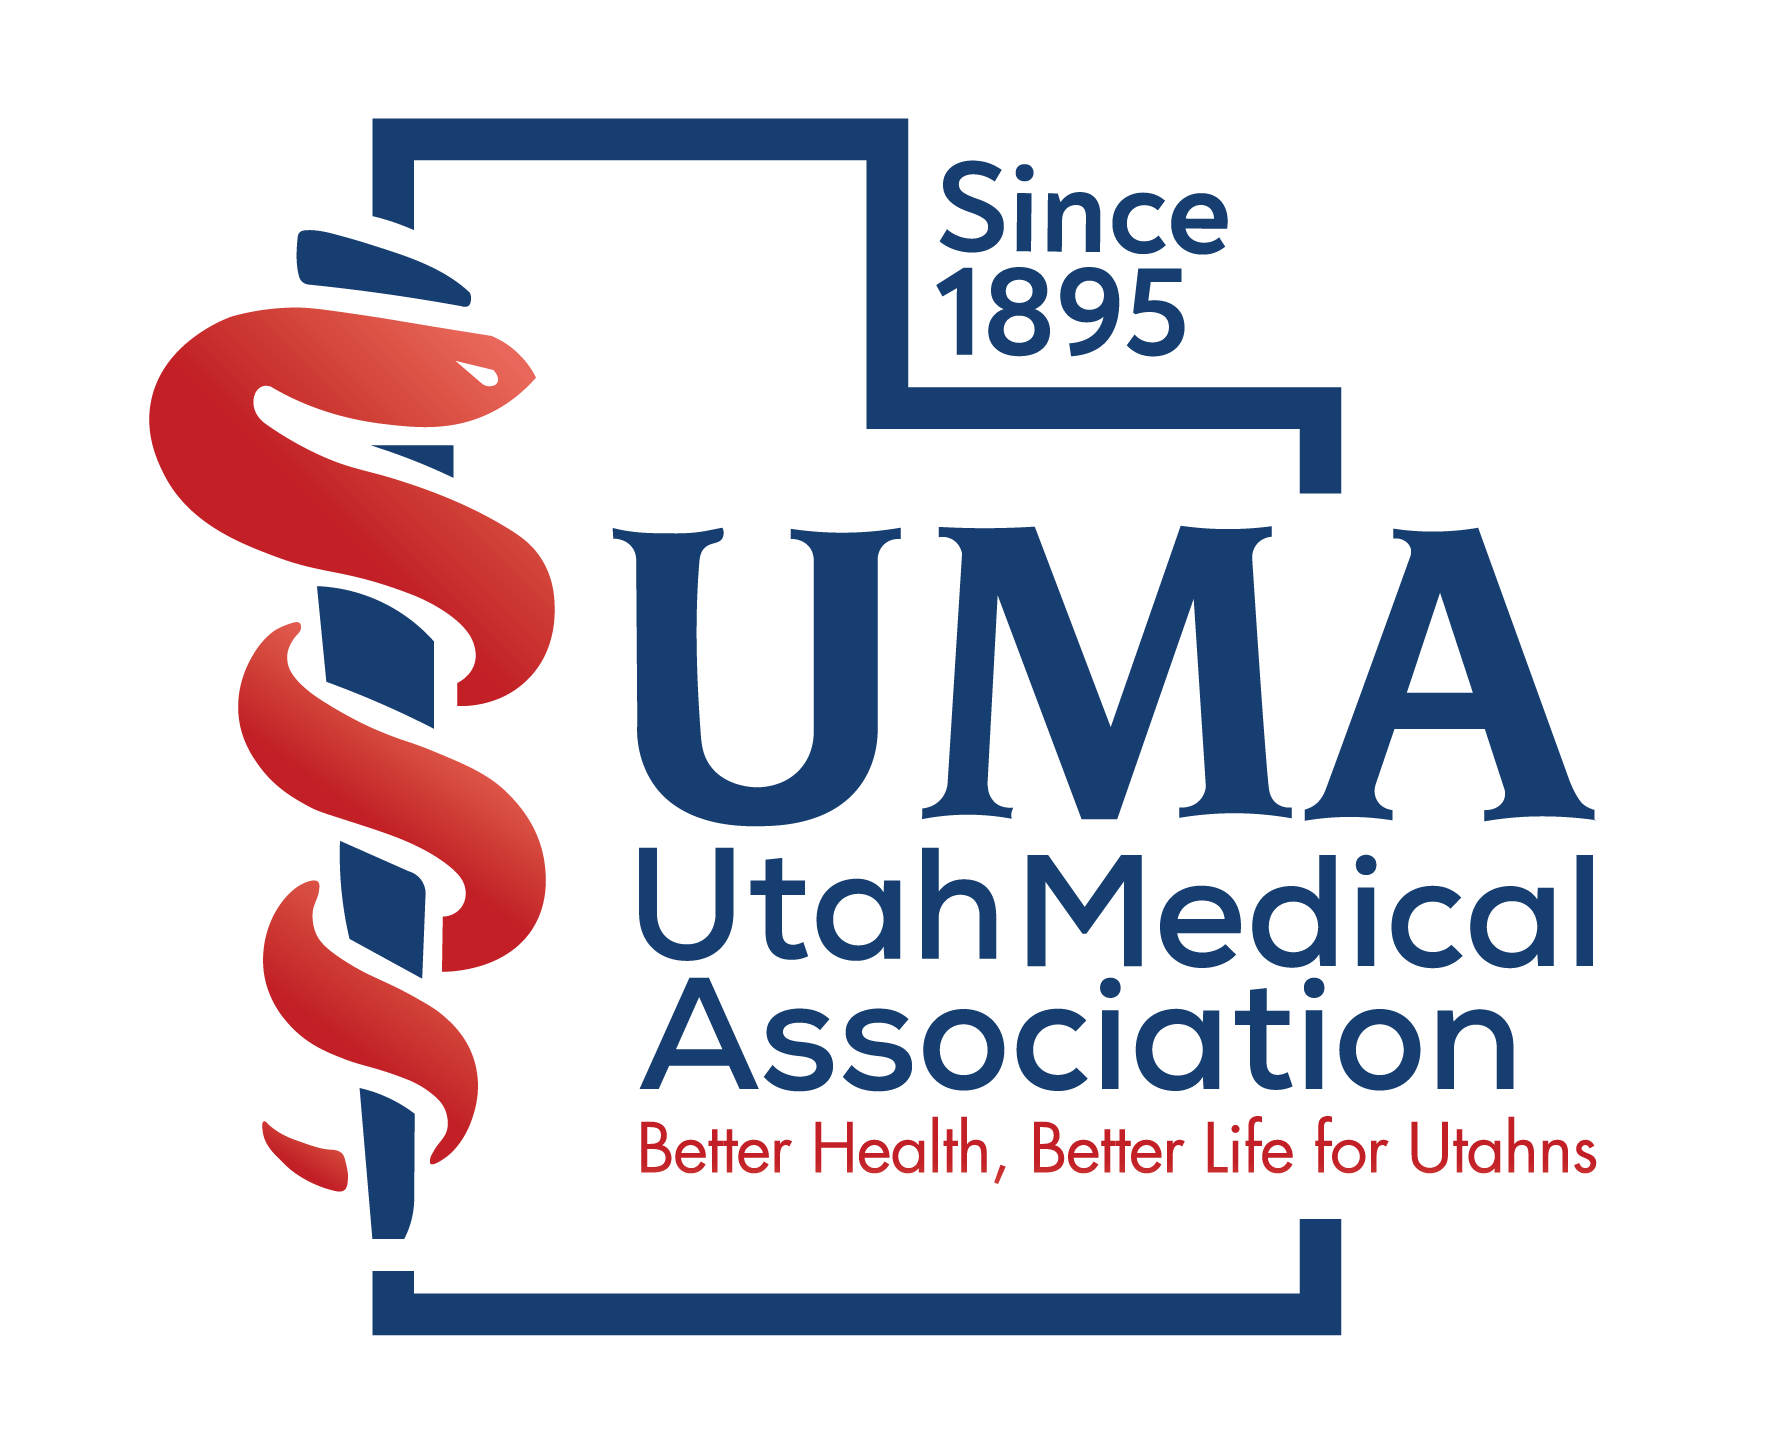 utah medical association logo.png